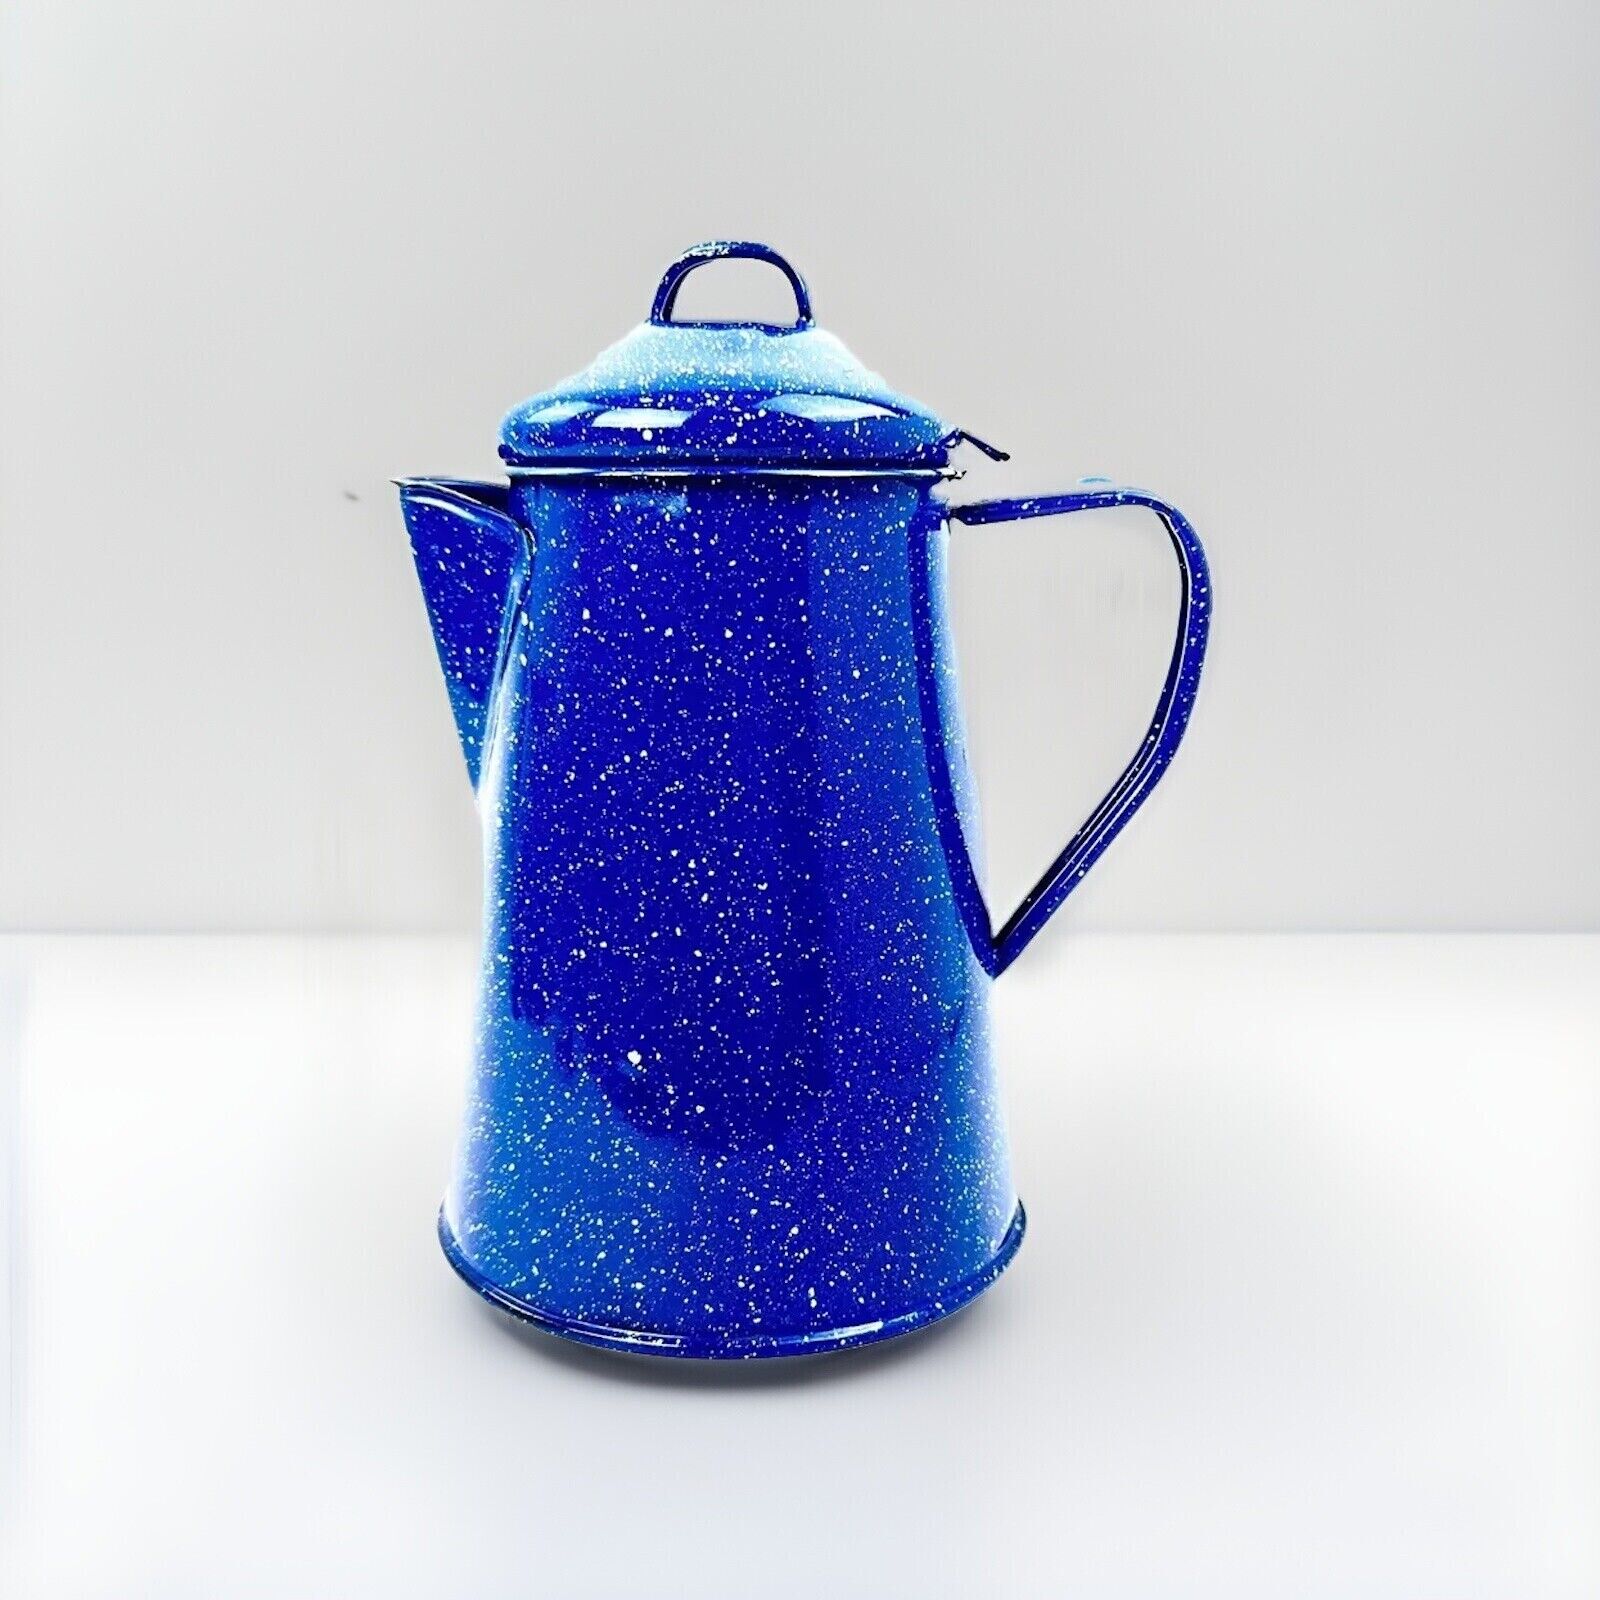 Vintage Enamel Ware Blue White Speckled Camping/Cowboy Coffee Pot Kettle 1 Liter